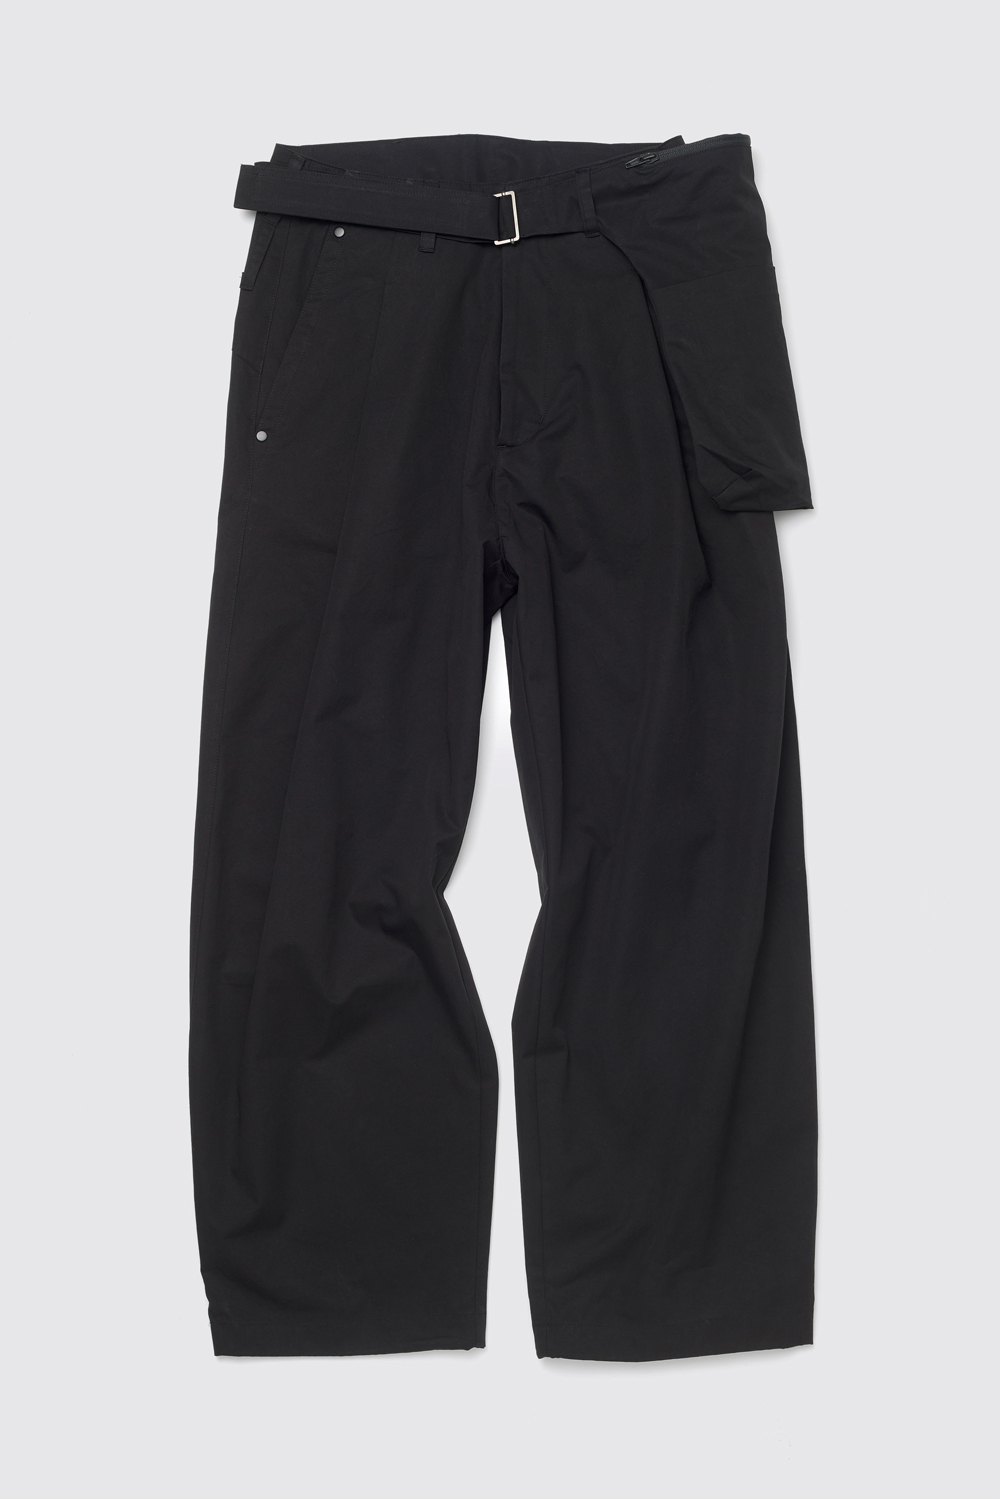 Deep Pleats Trousers V2 Black + Holster Bag Black